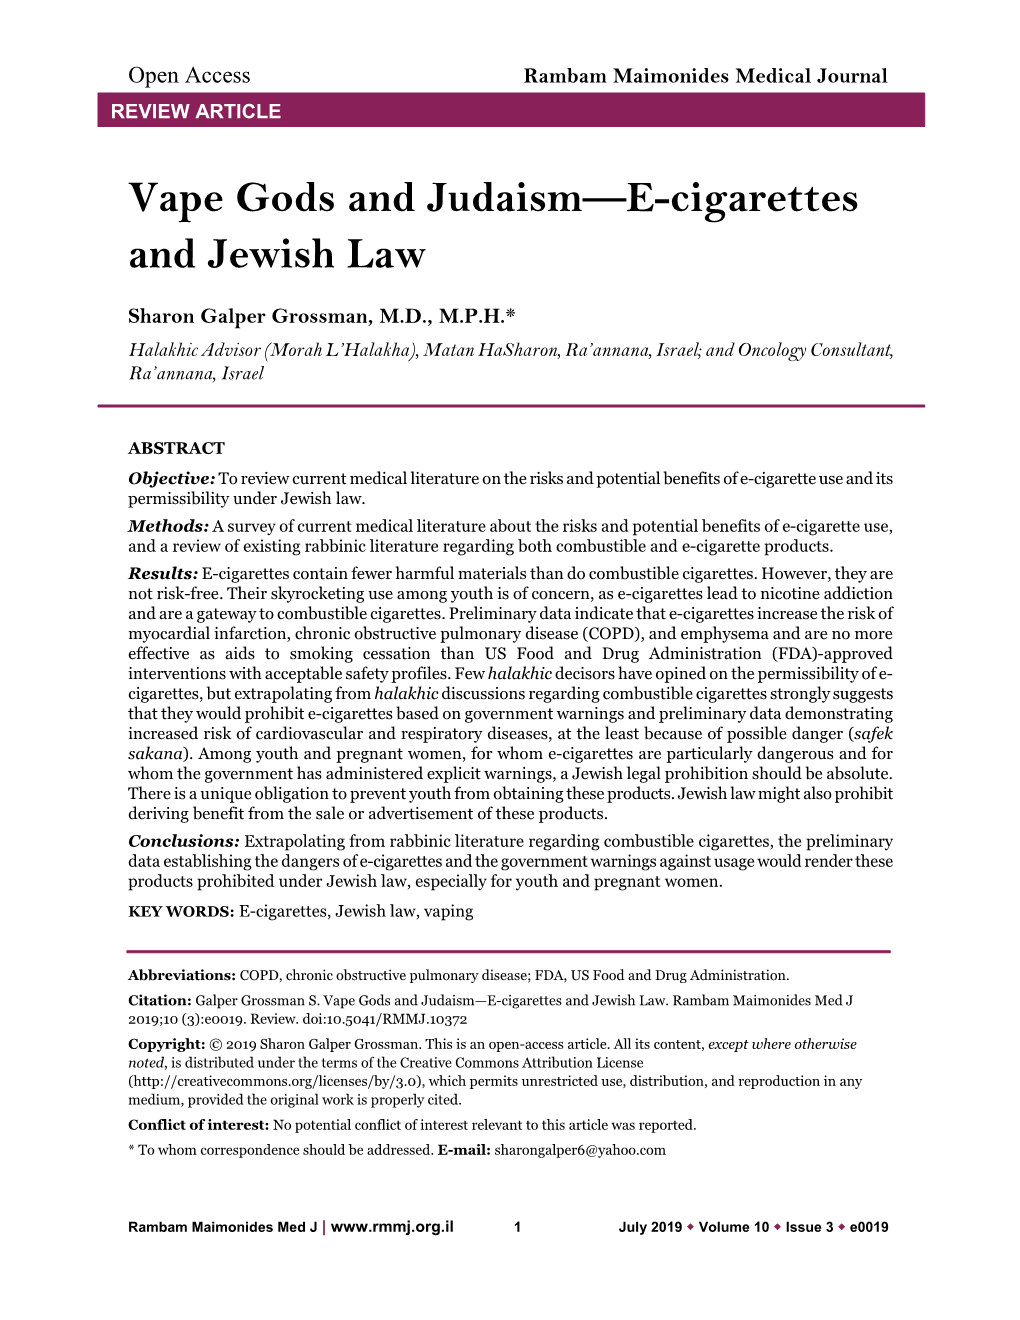 Vape Gods and Judaism—E-Cigarettes and Jewish Law